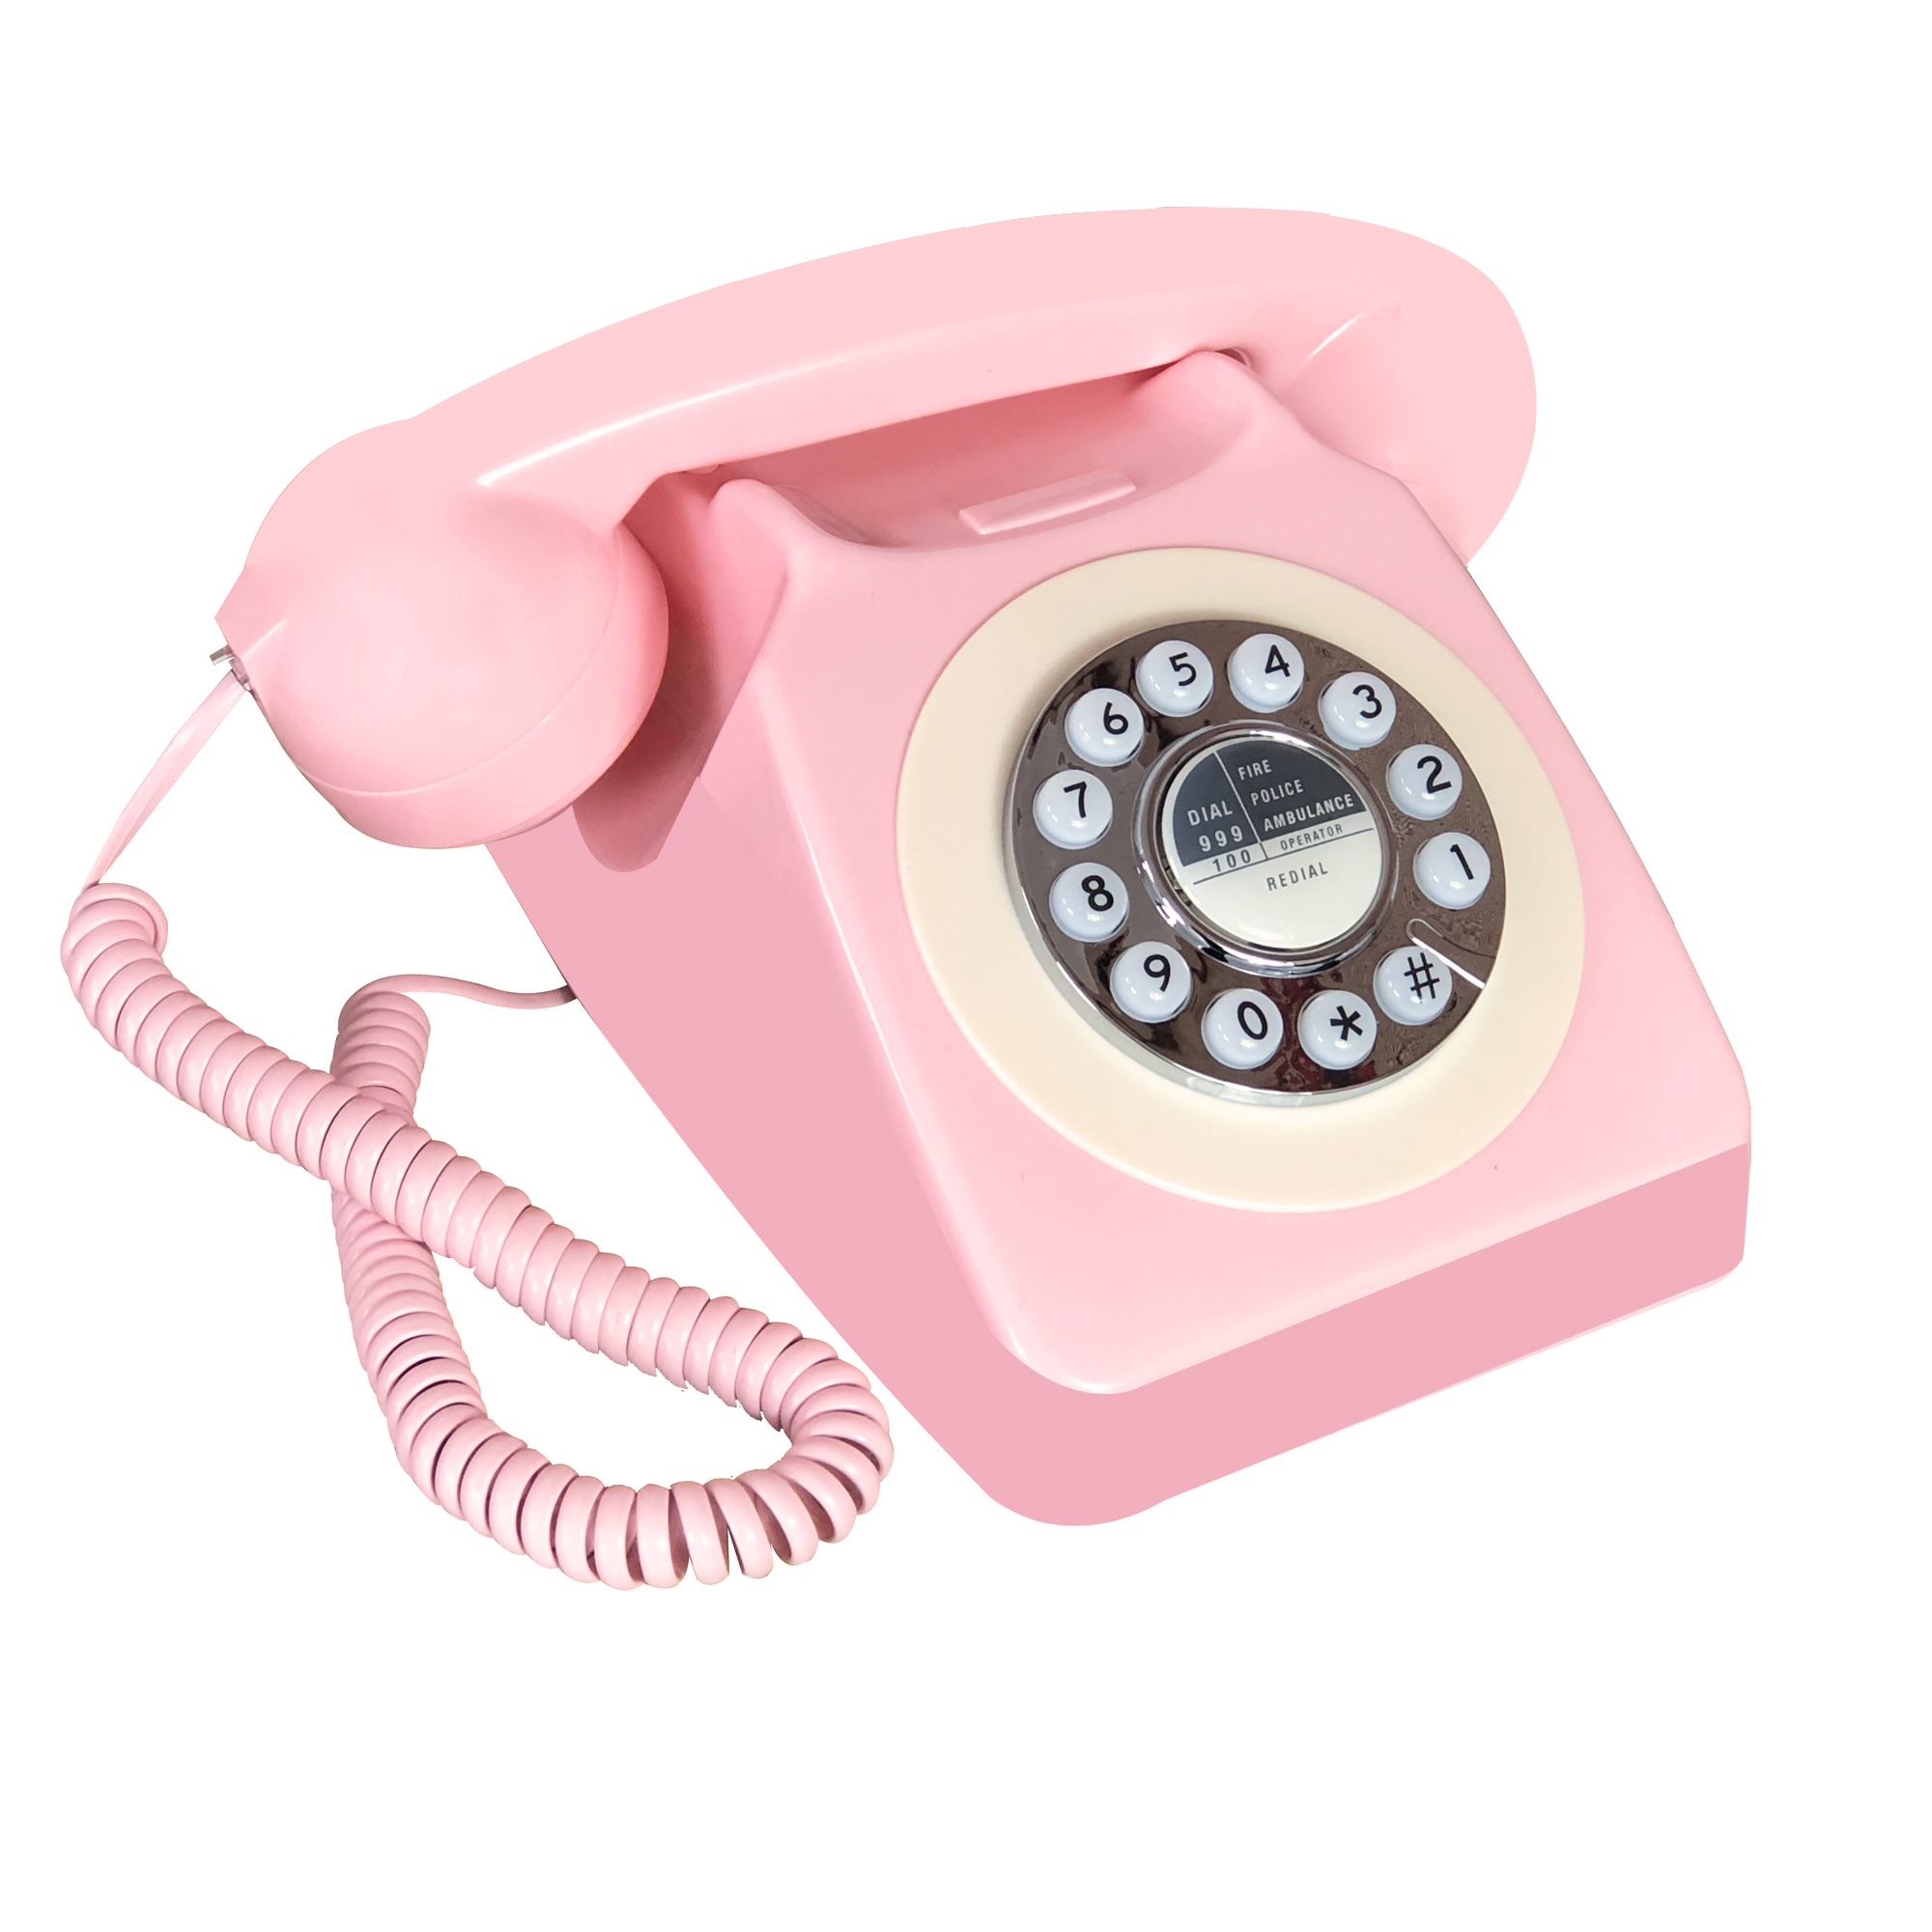  TelPal Teléfono fijo para el hogar, teléfono de casa retro de  la vieja moda, teléfono con cable manos libres con teclado giratorio,  oficina/hotel/teléfono antiguo Shcool : Productos de Oficina